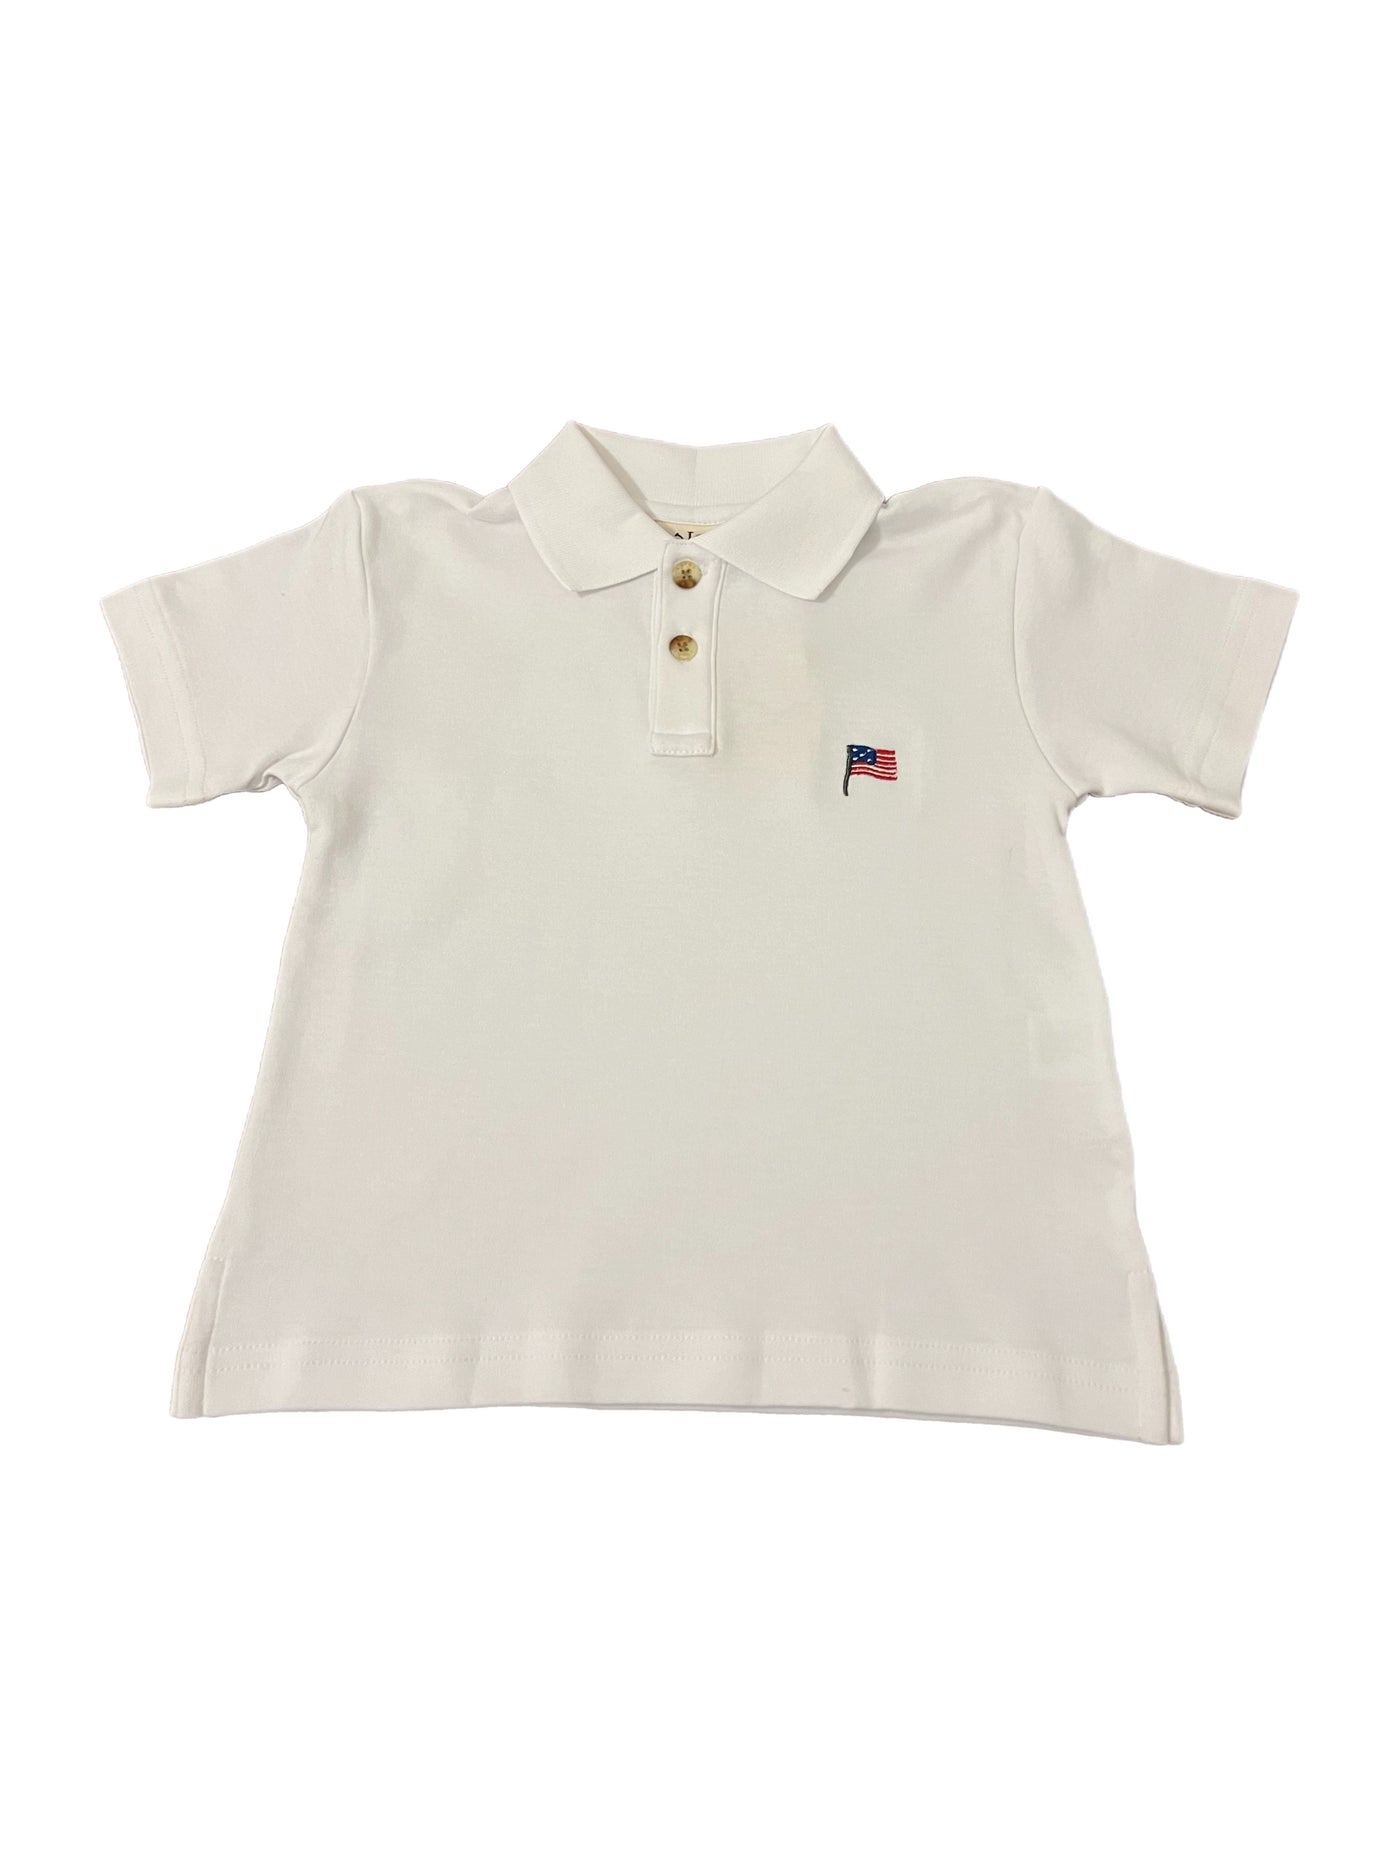 S/S White Flag Polo Shirt